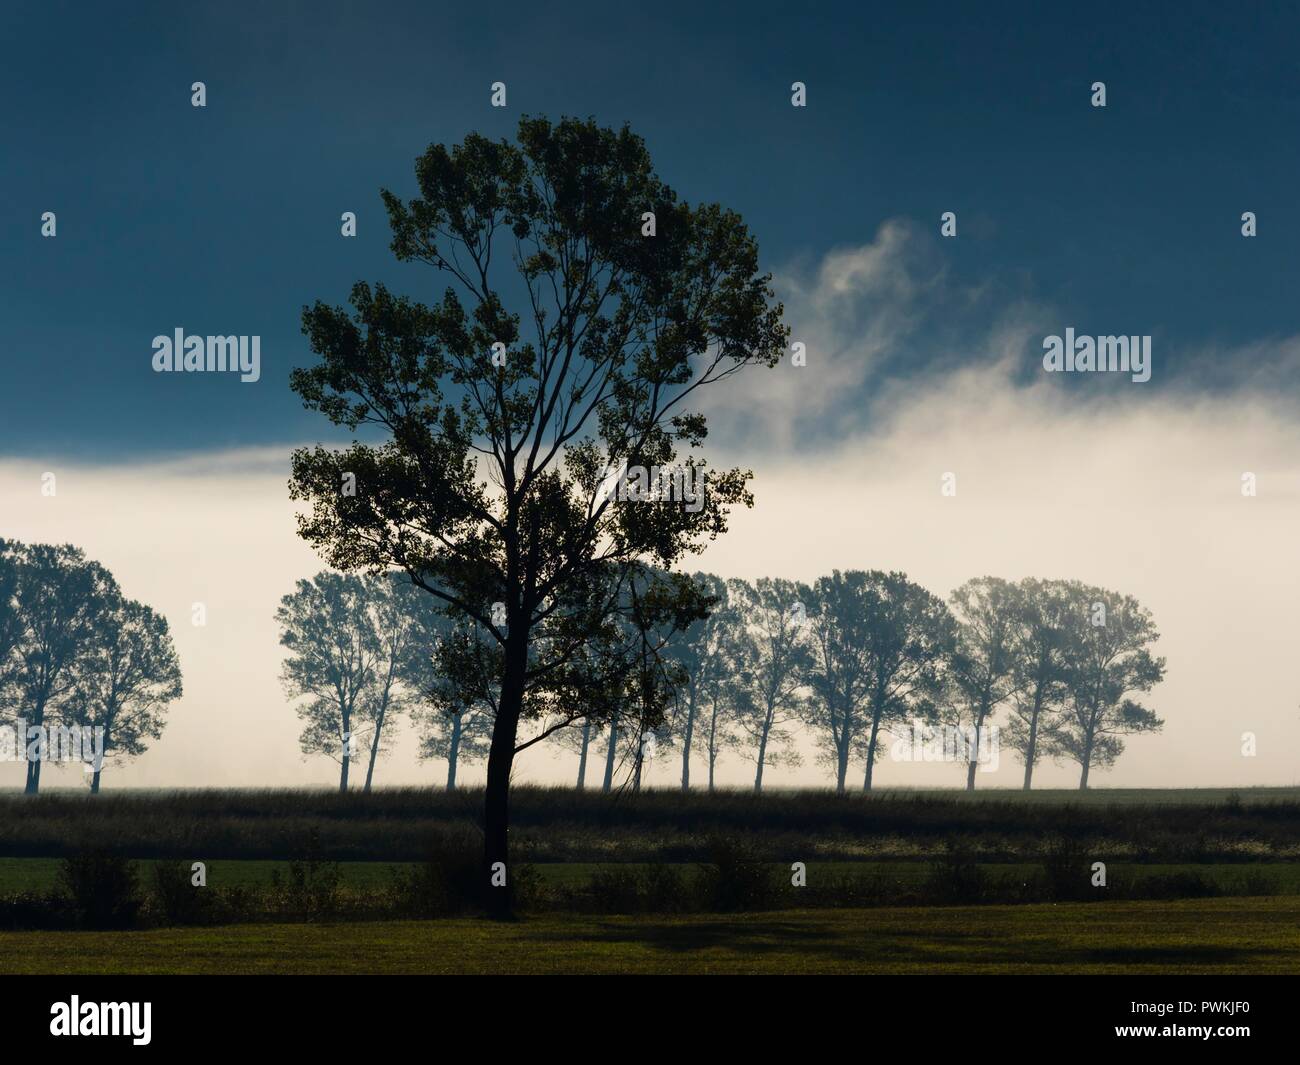 Morning country-side landscape dramatic dark image Stock Photo